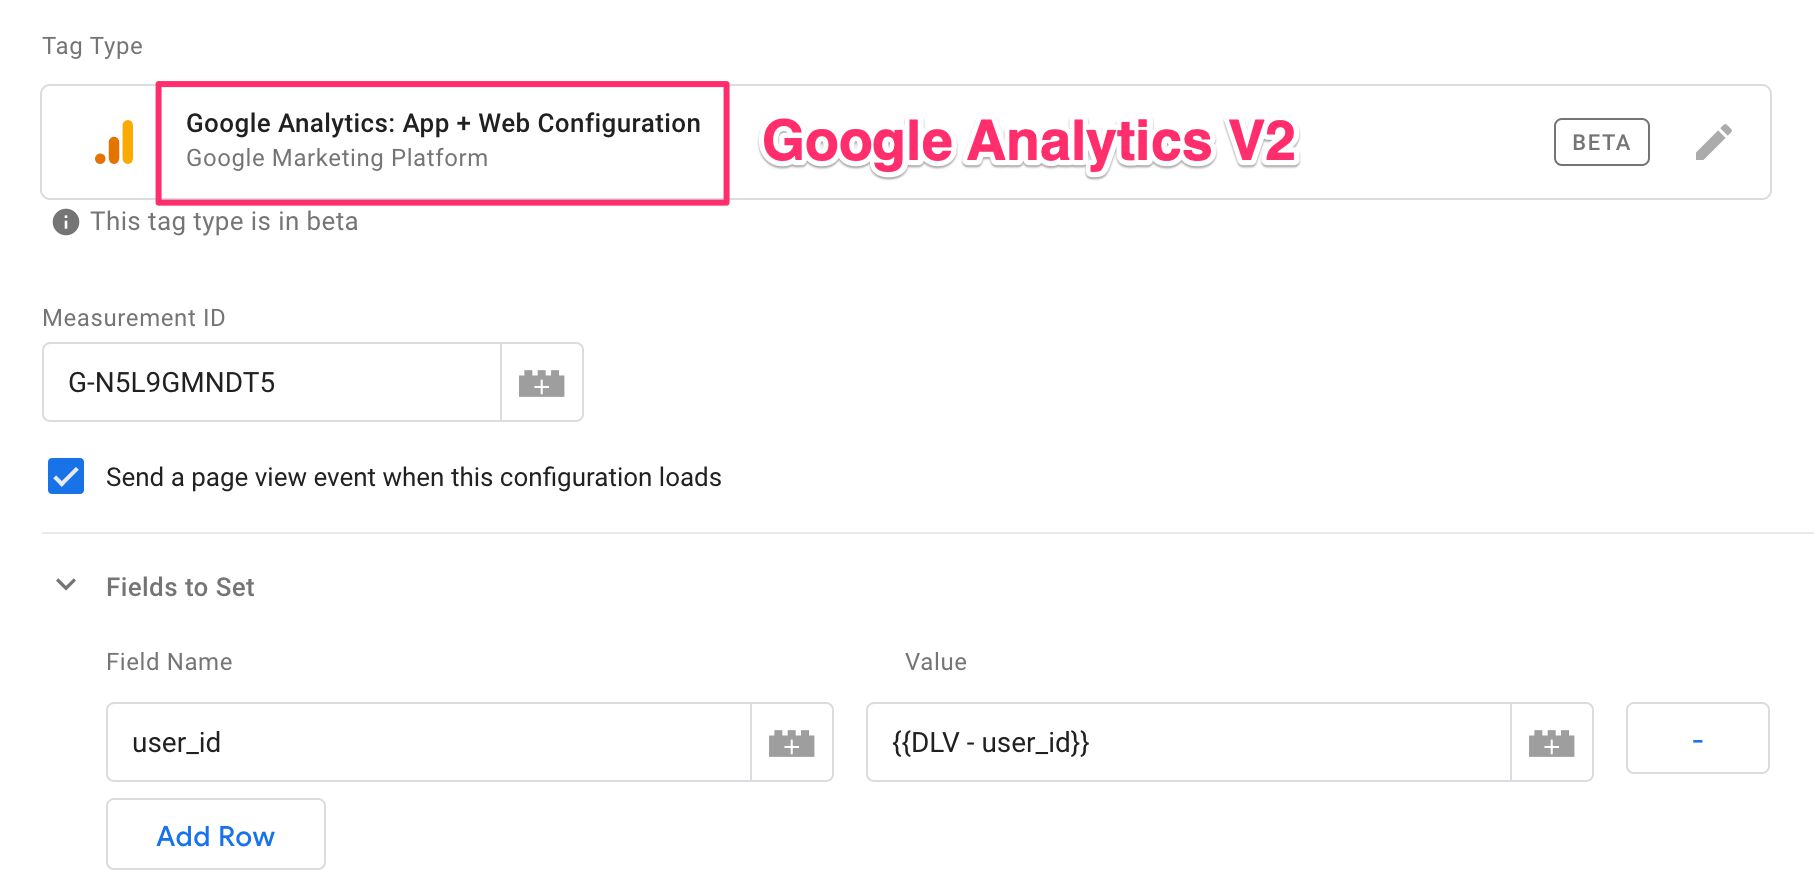 Google Analytics: App + Web